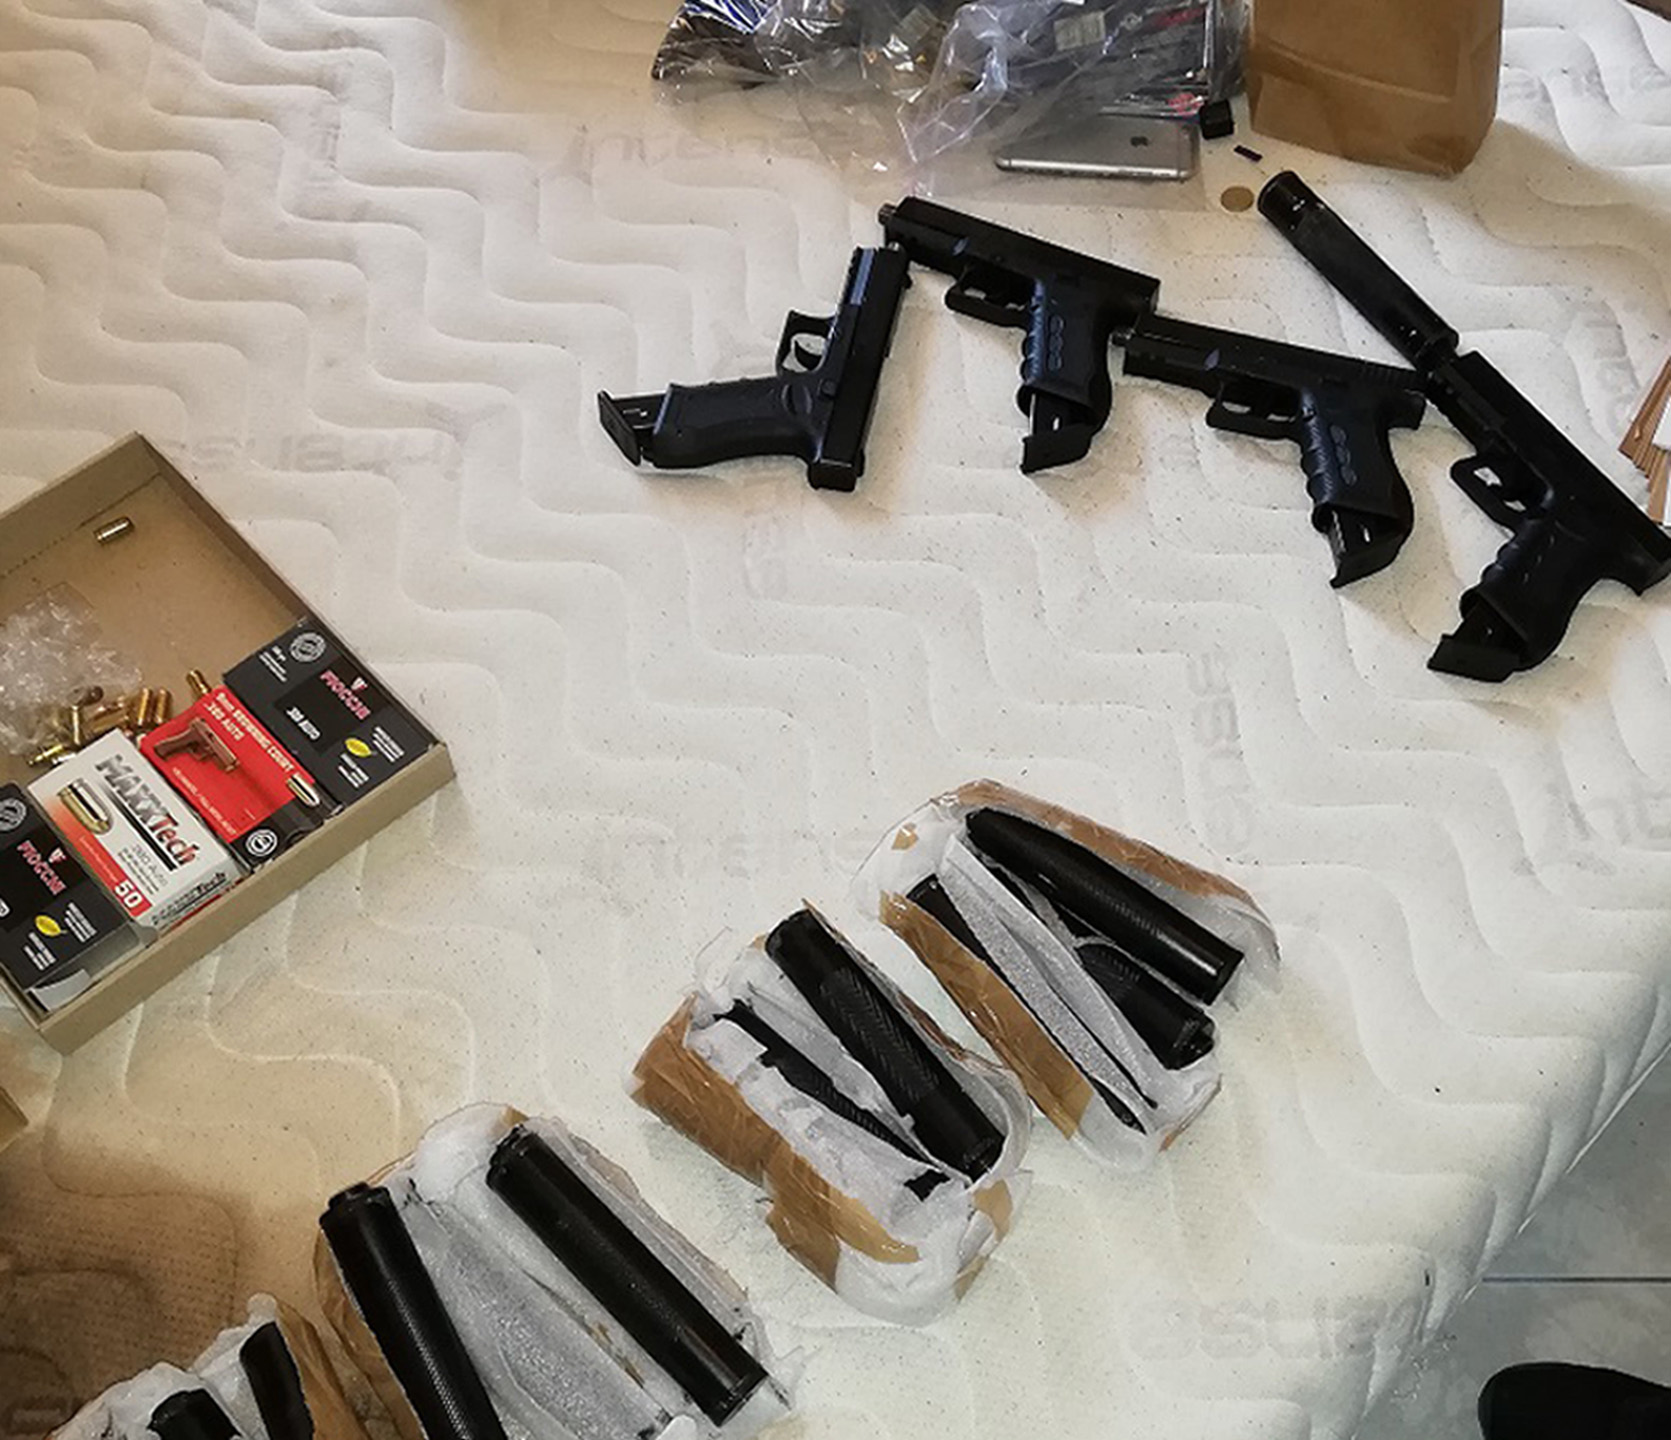 Guns seized by police.